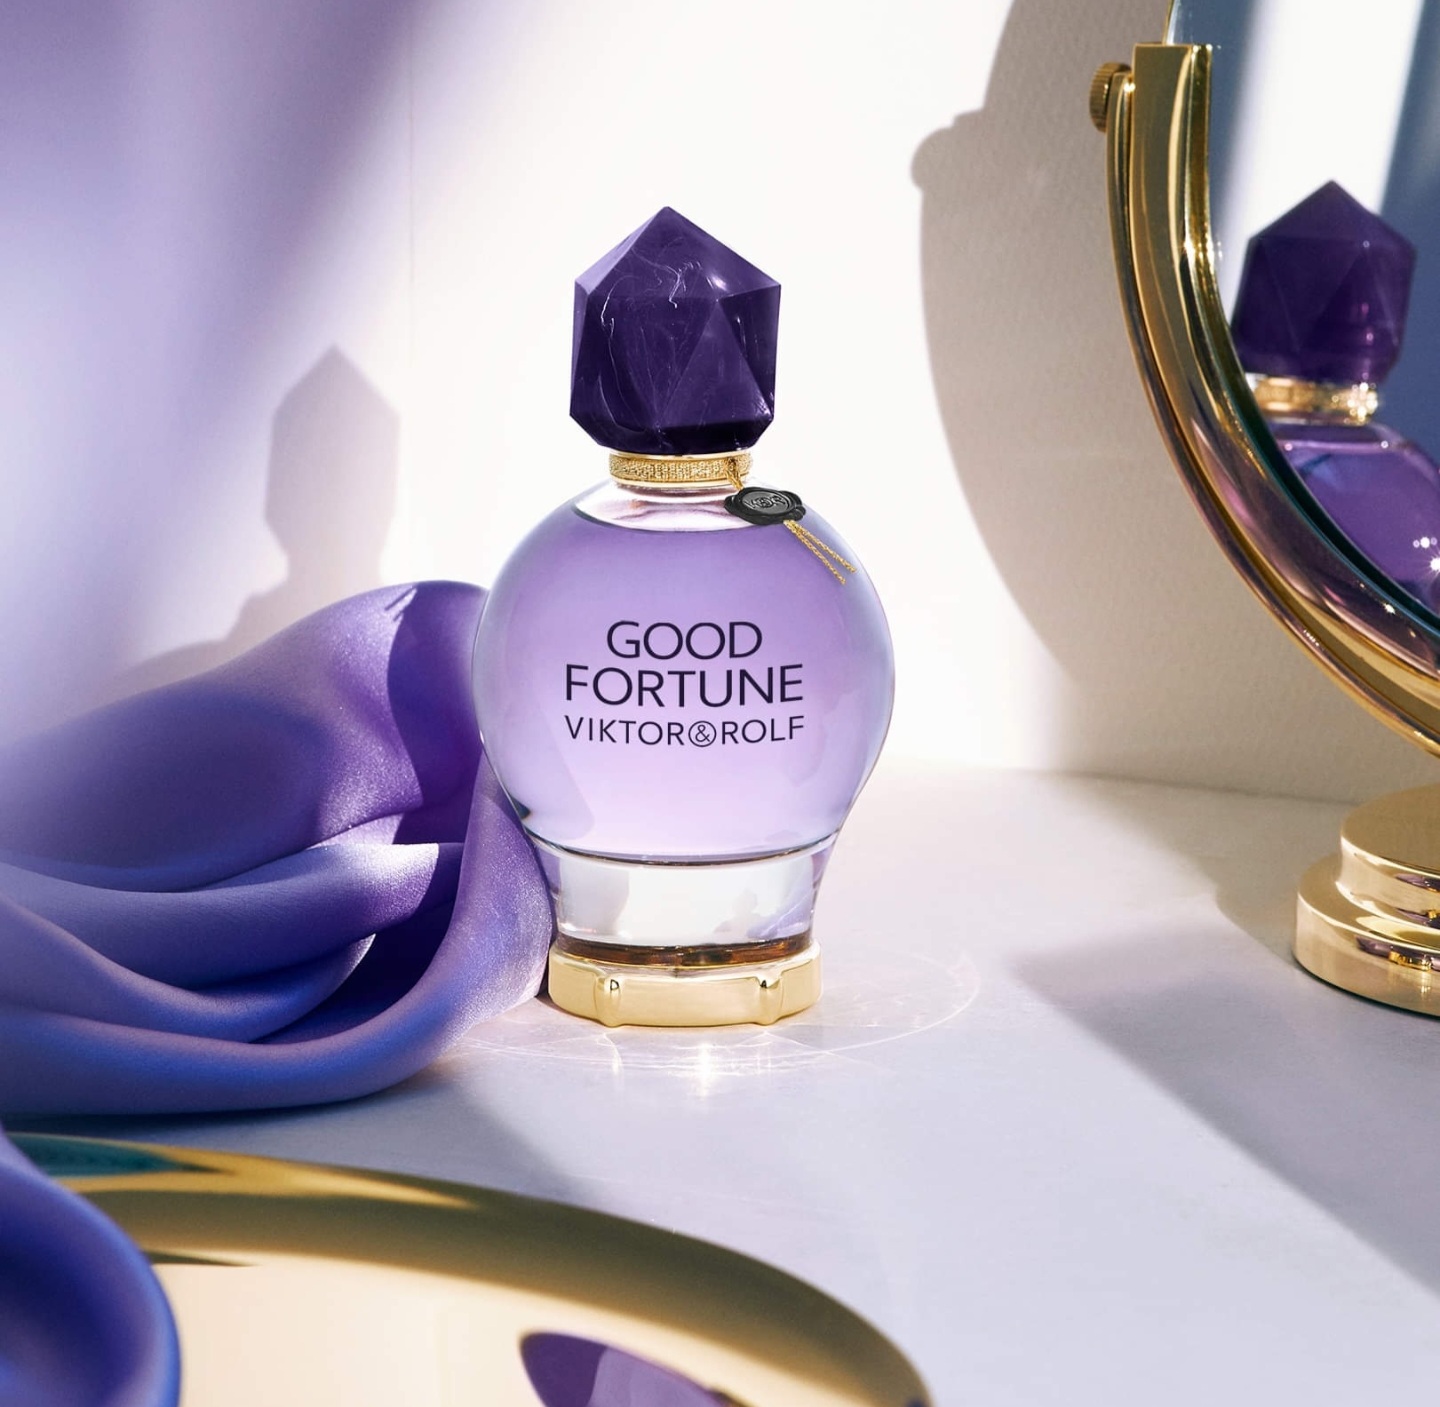 Free Sample of Vikor&Rolf New Good Fortune Fragrance